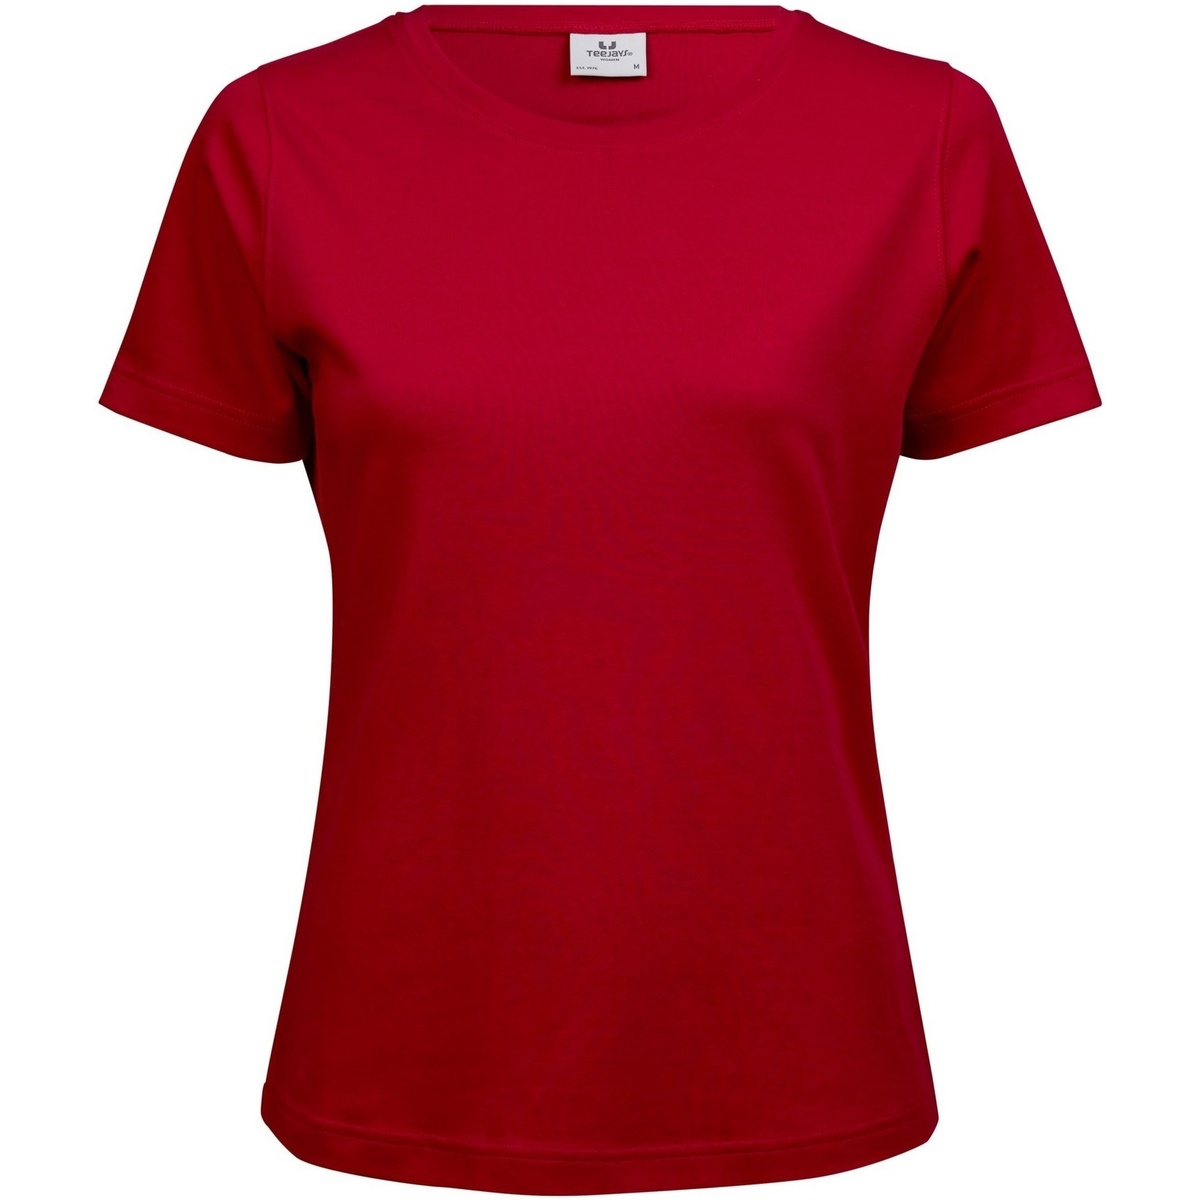 Vêtements Femme Elmira V-neck T-shirt Gray Melange Interlock Rouge